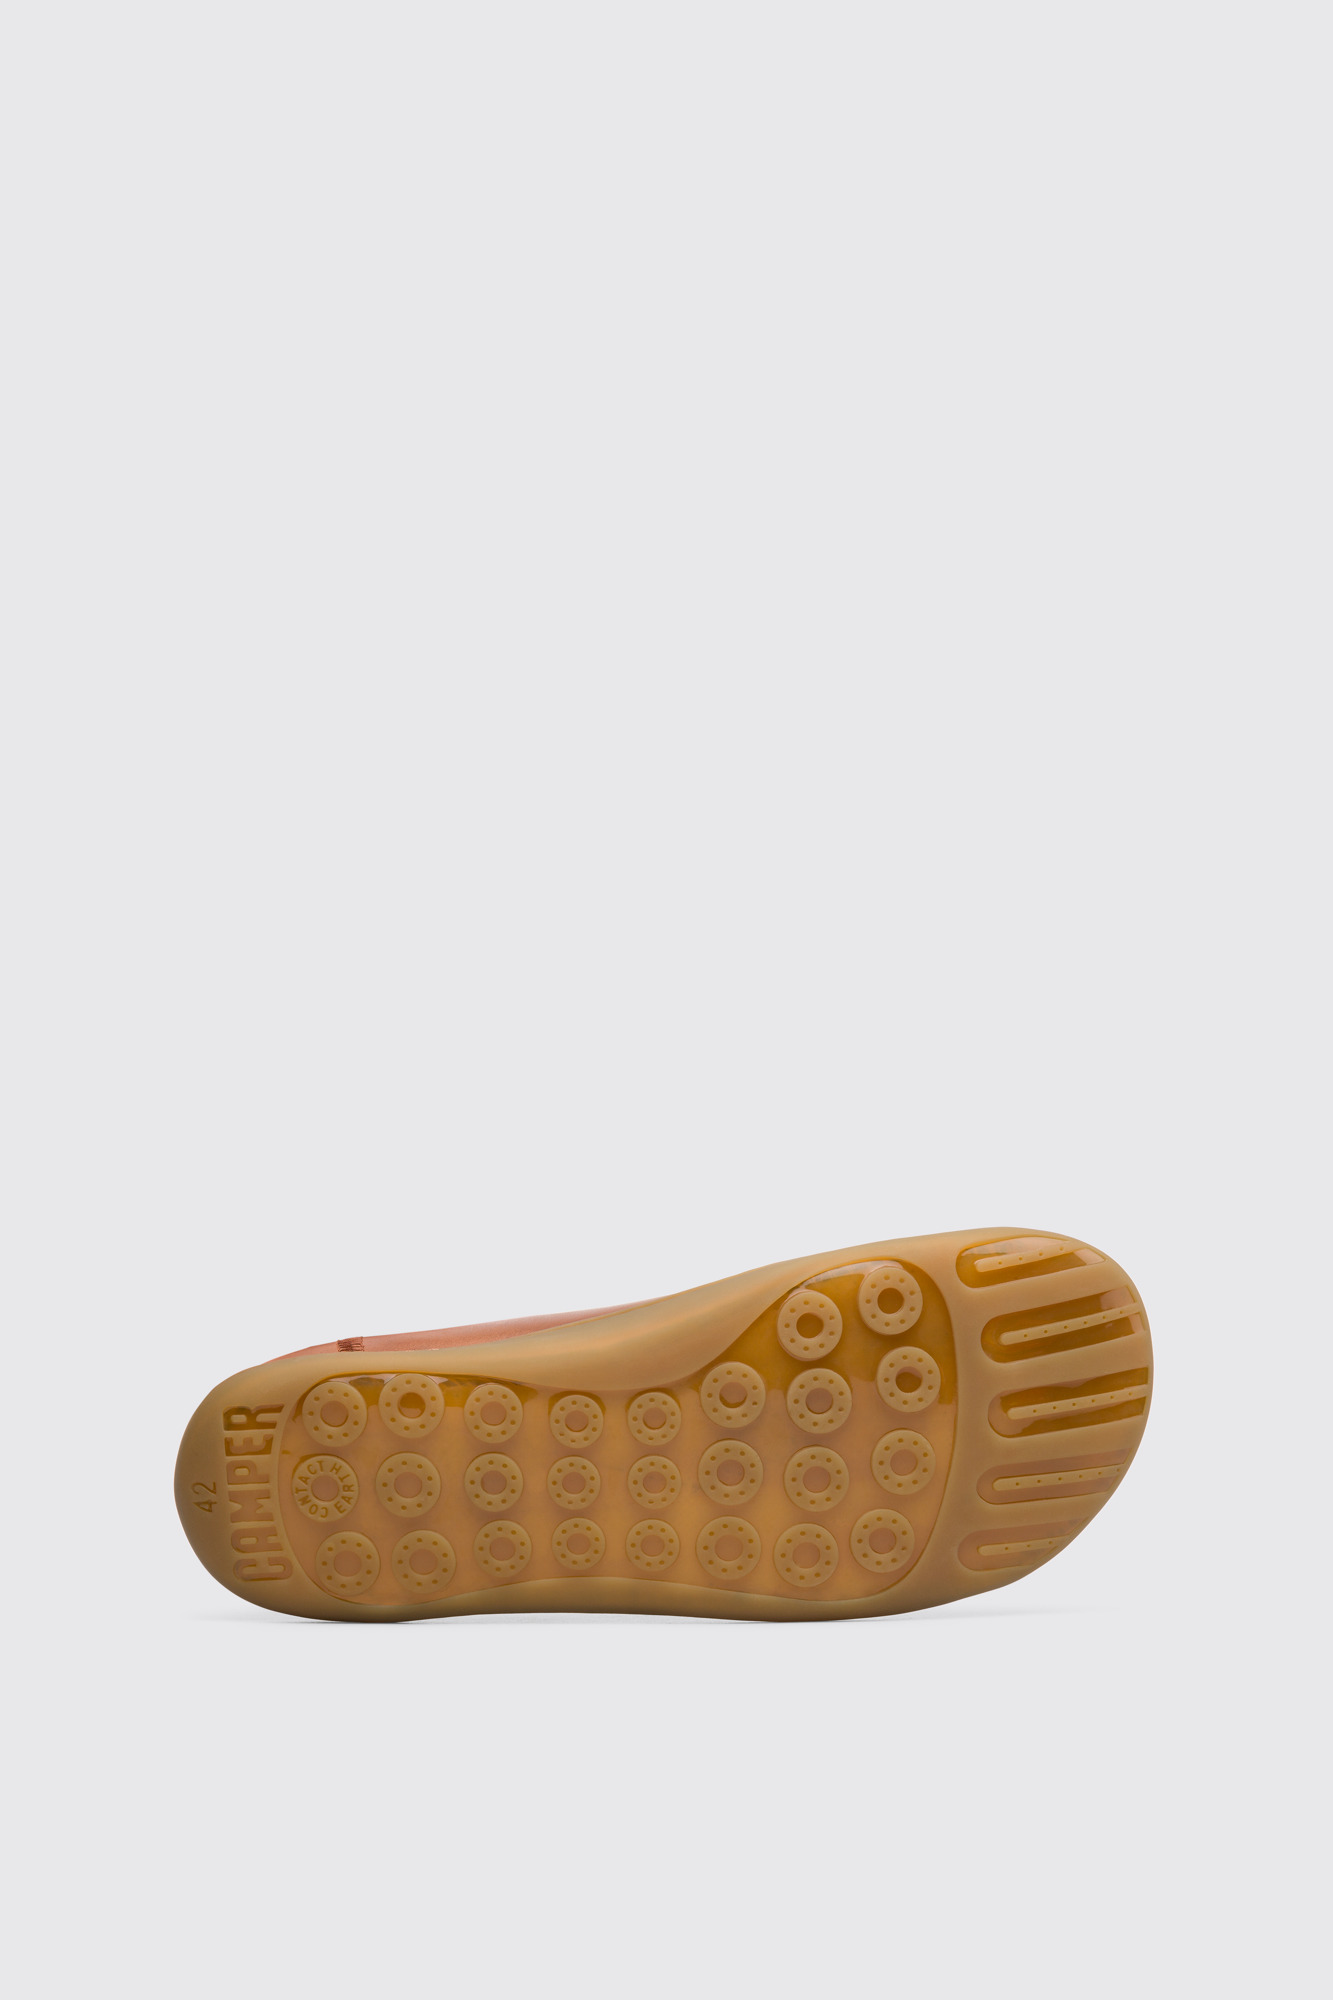 Buy Camper, 17665 Peu Cami Men's Sneaker, dark brown » at MBaetz online